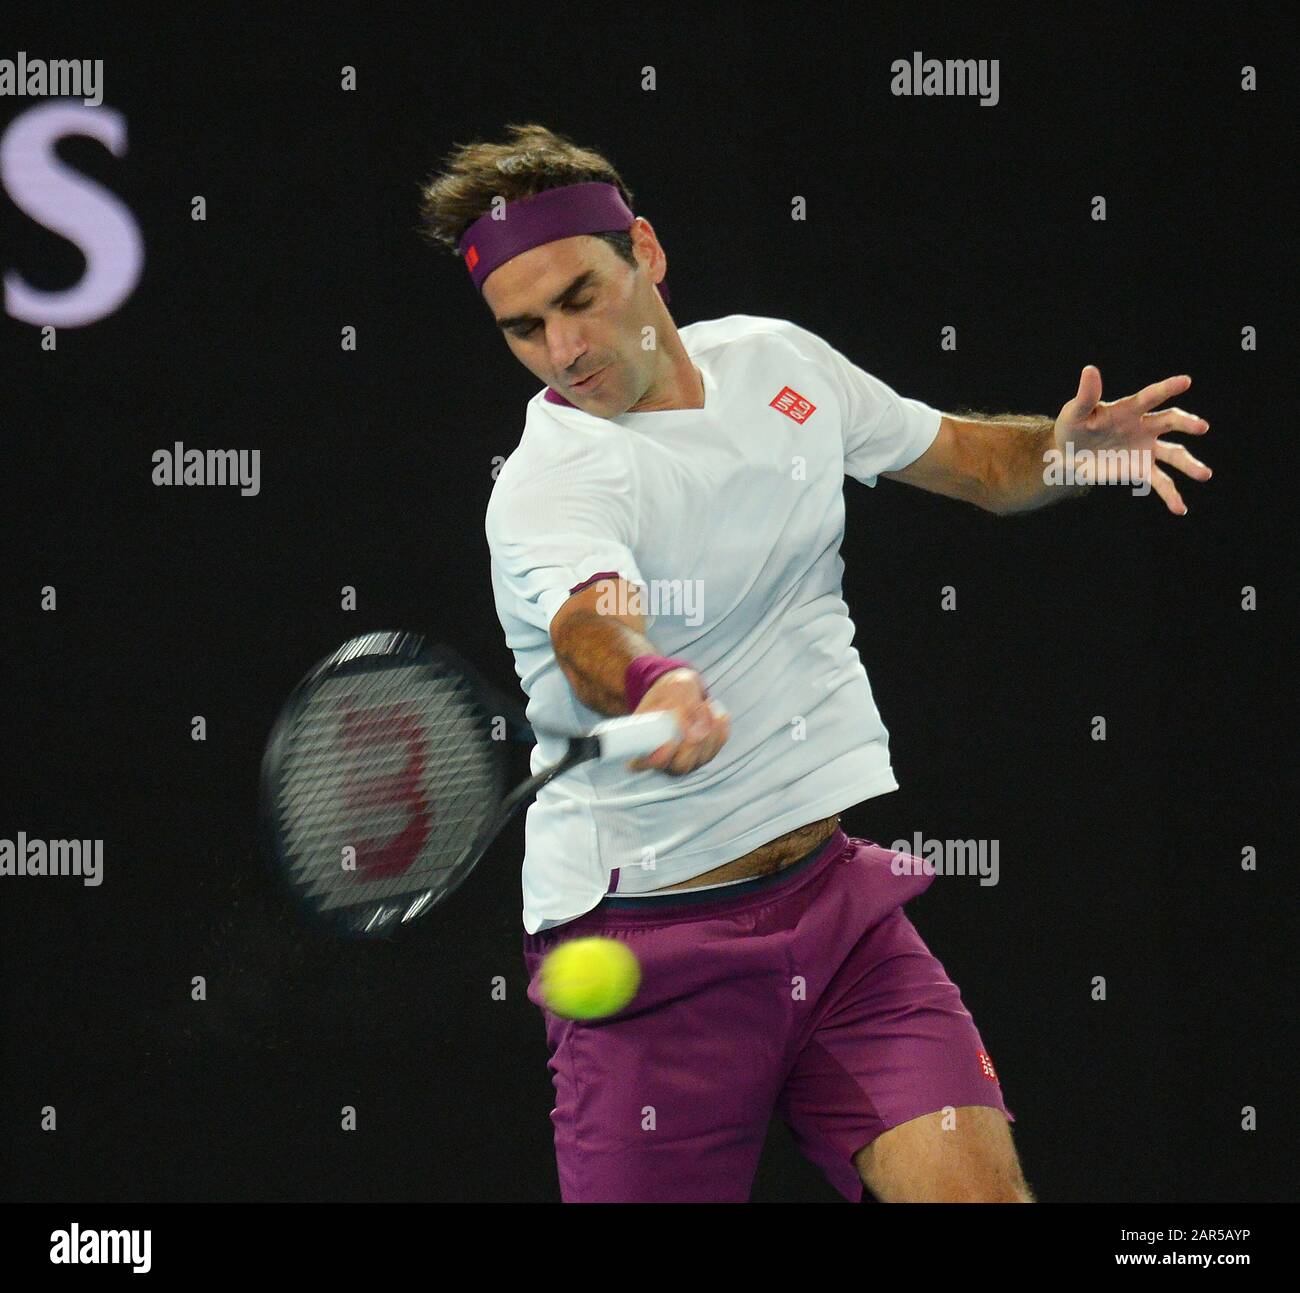 Melbourne, Australien. 26. Januar 2020. D4 Roger Federer (SUI) im vierten Spiel Foto Anne Parker International Sports Fotos Ltd/Alamy Live News Stockfoto